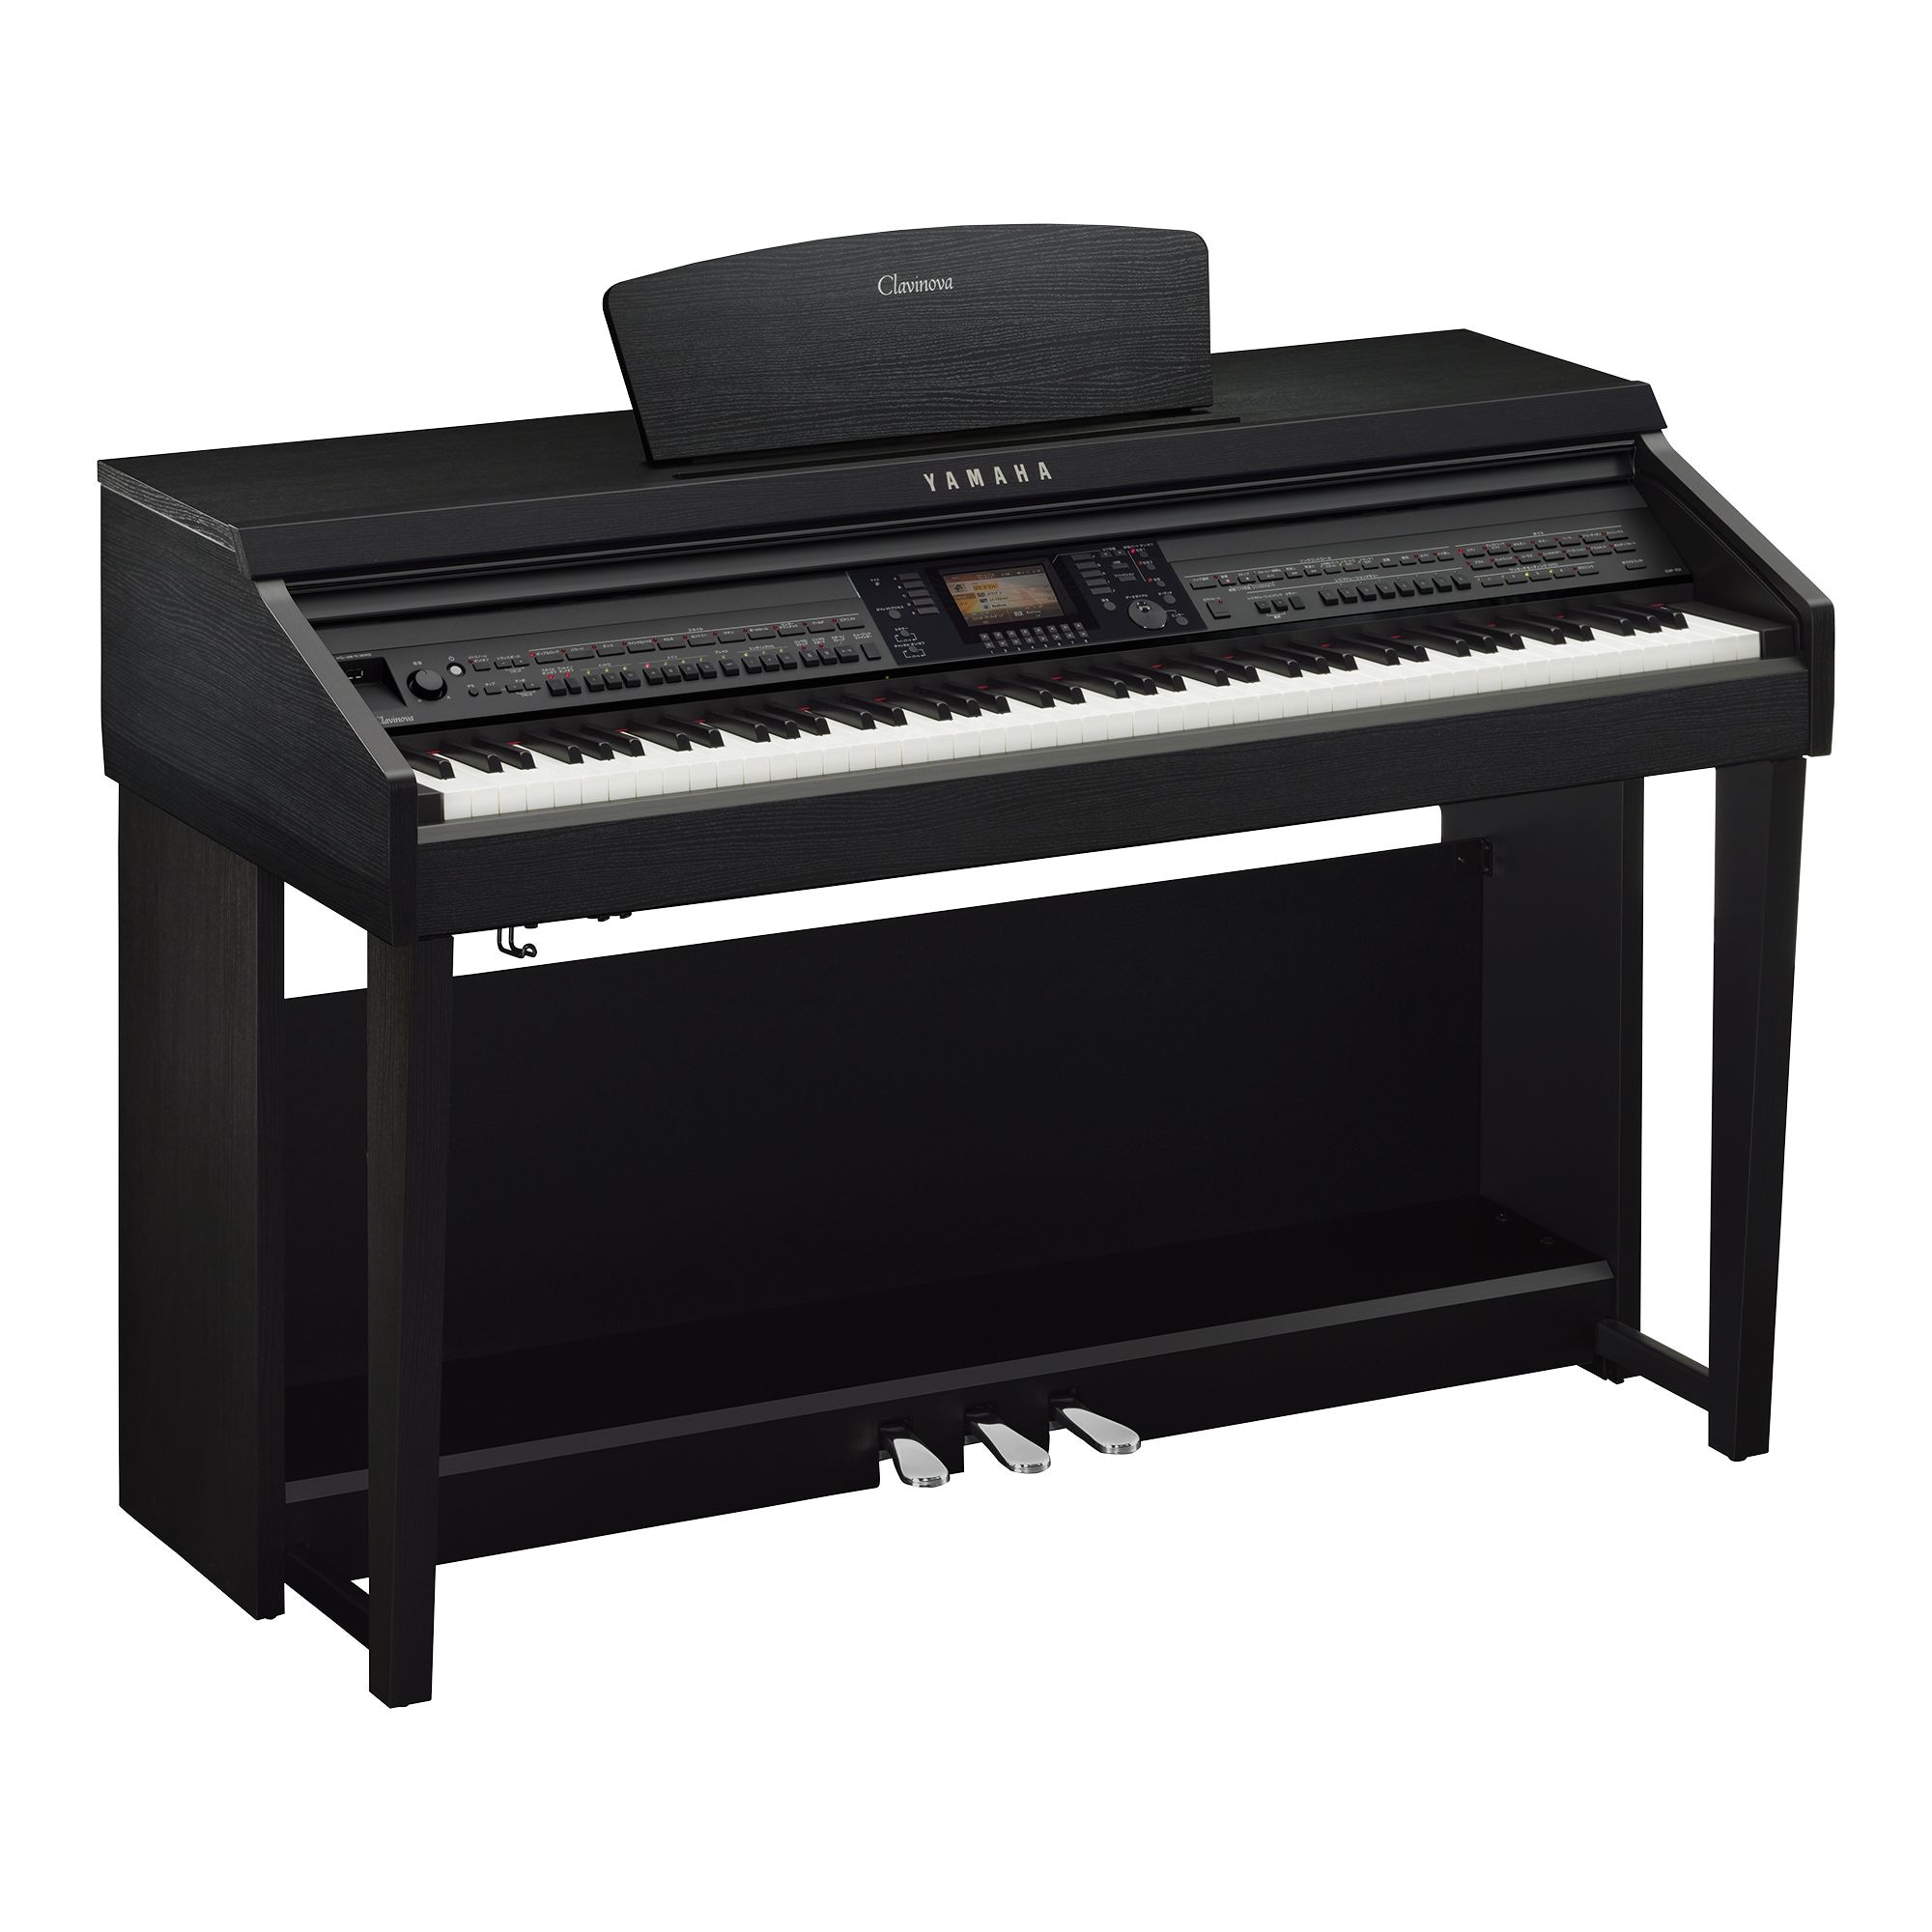 CVP-701 - Descripción - Clavinova - Pianos Instrumentos musicales Productos Yamaha - España